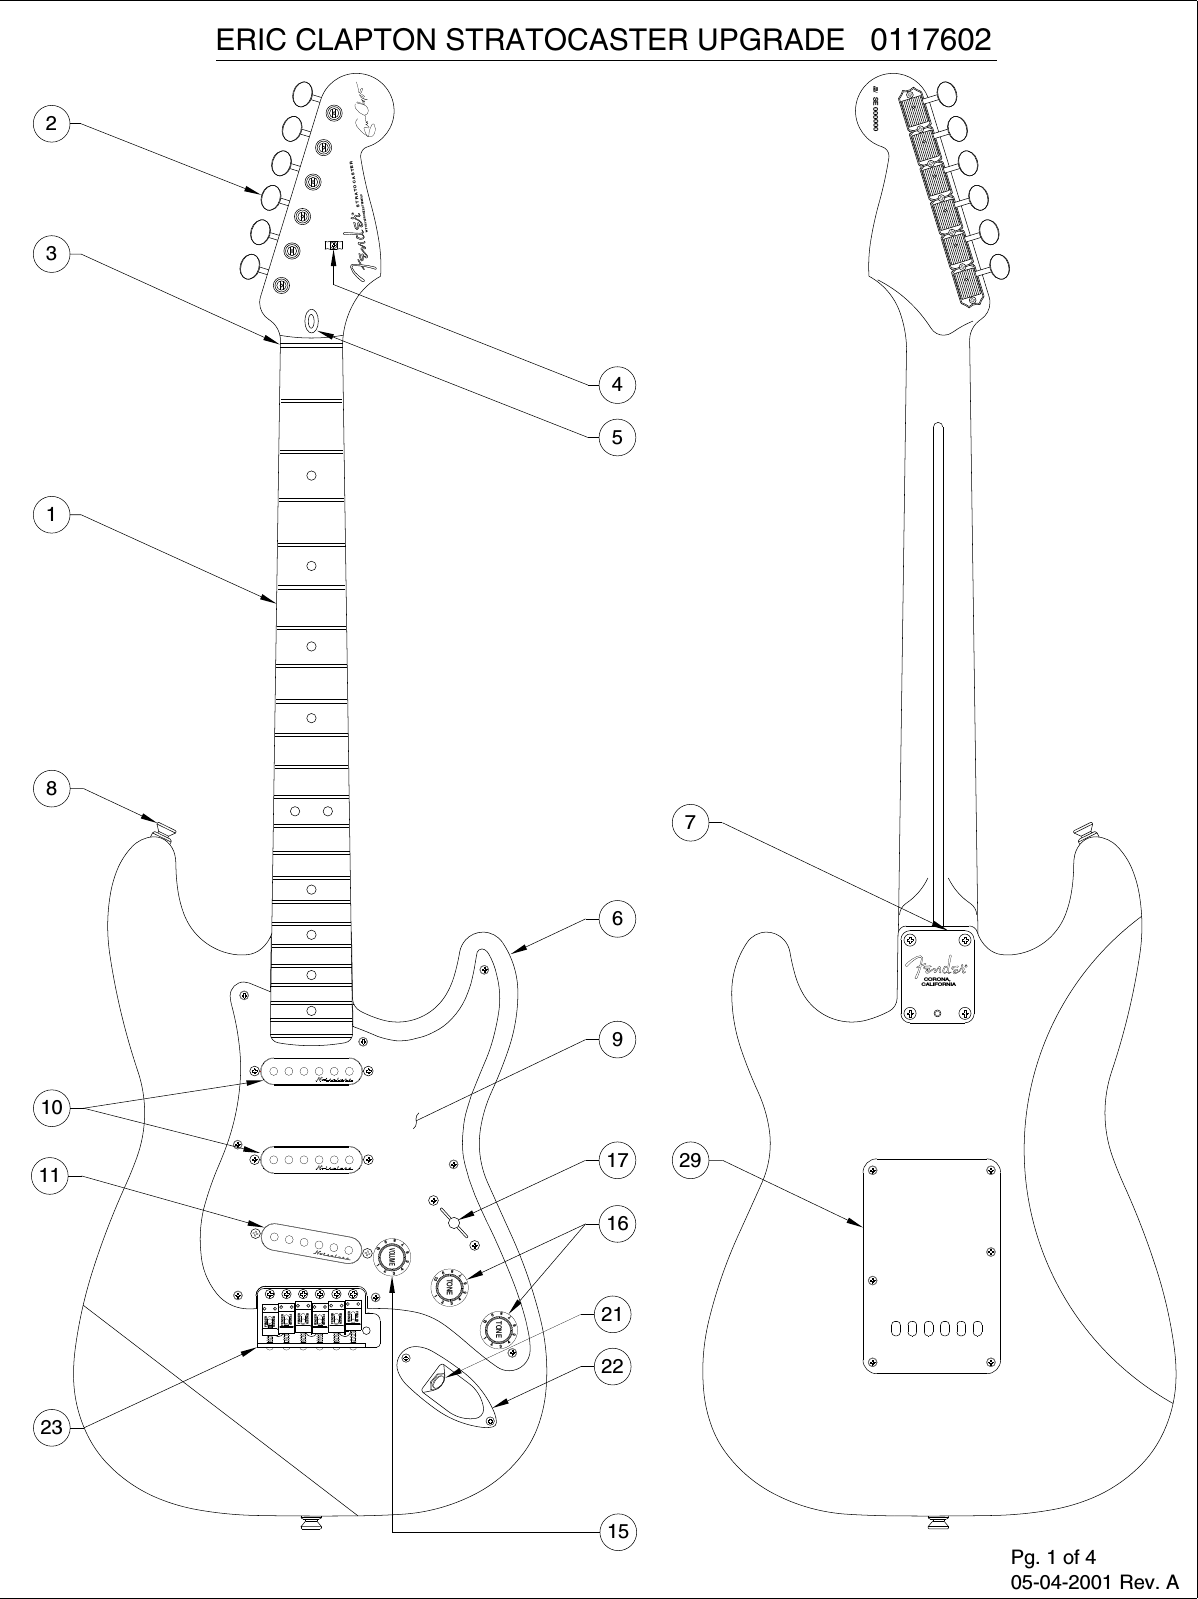 Eric Clapton Strat Wiring Diagram from usermanual.wiki